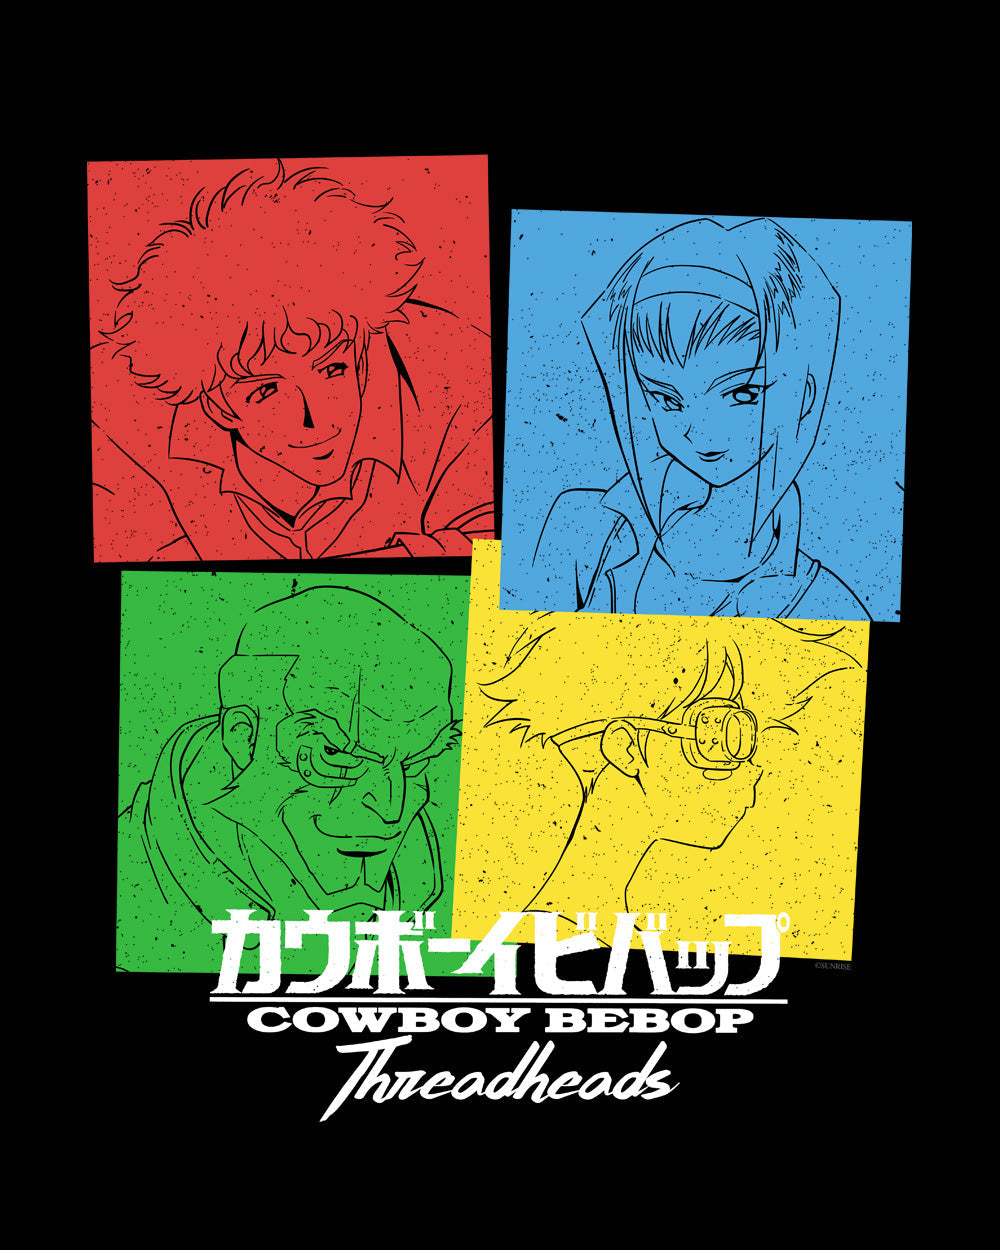 Cowboy Bebop Group Pop Art Officially Licensed Japanese Anime Sci-Fi 90s Adventure Cartoon Cotton T-Shirt